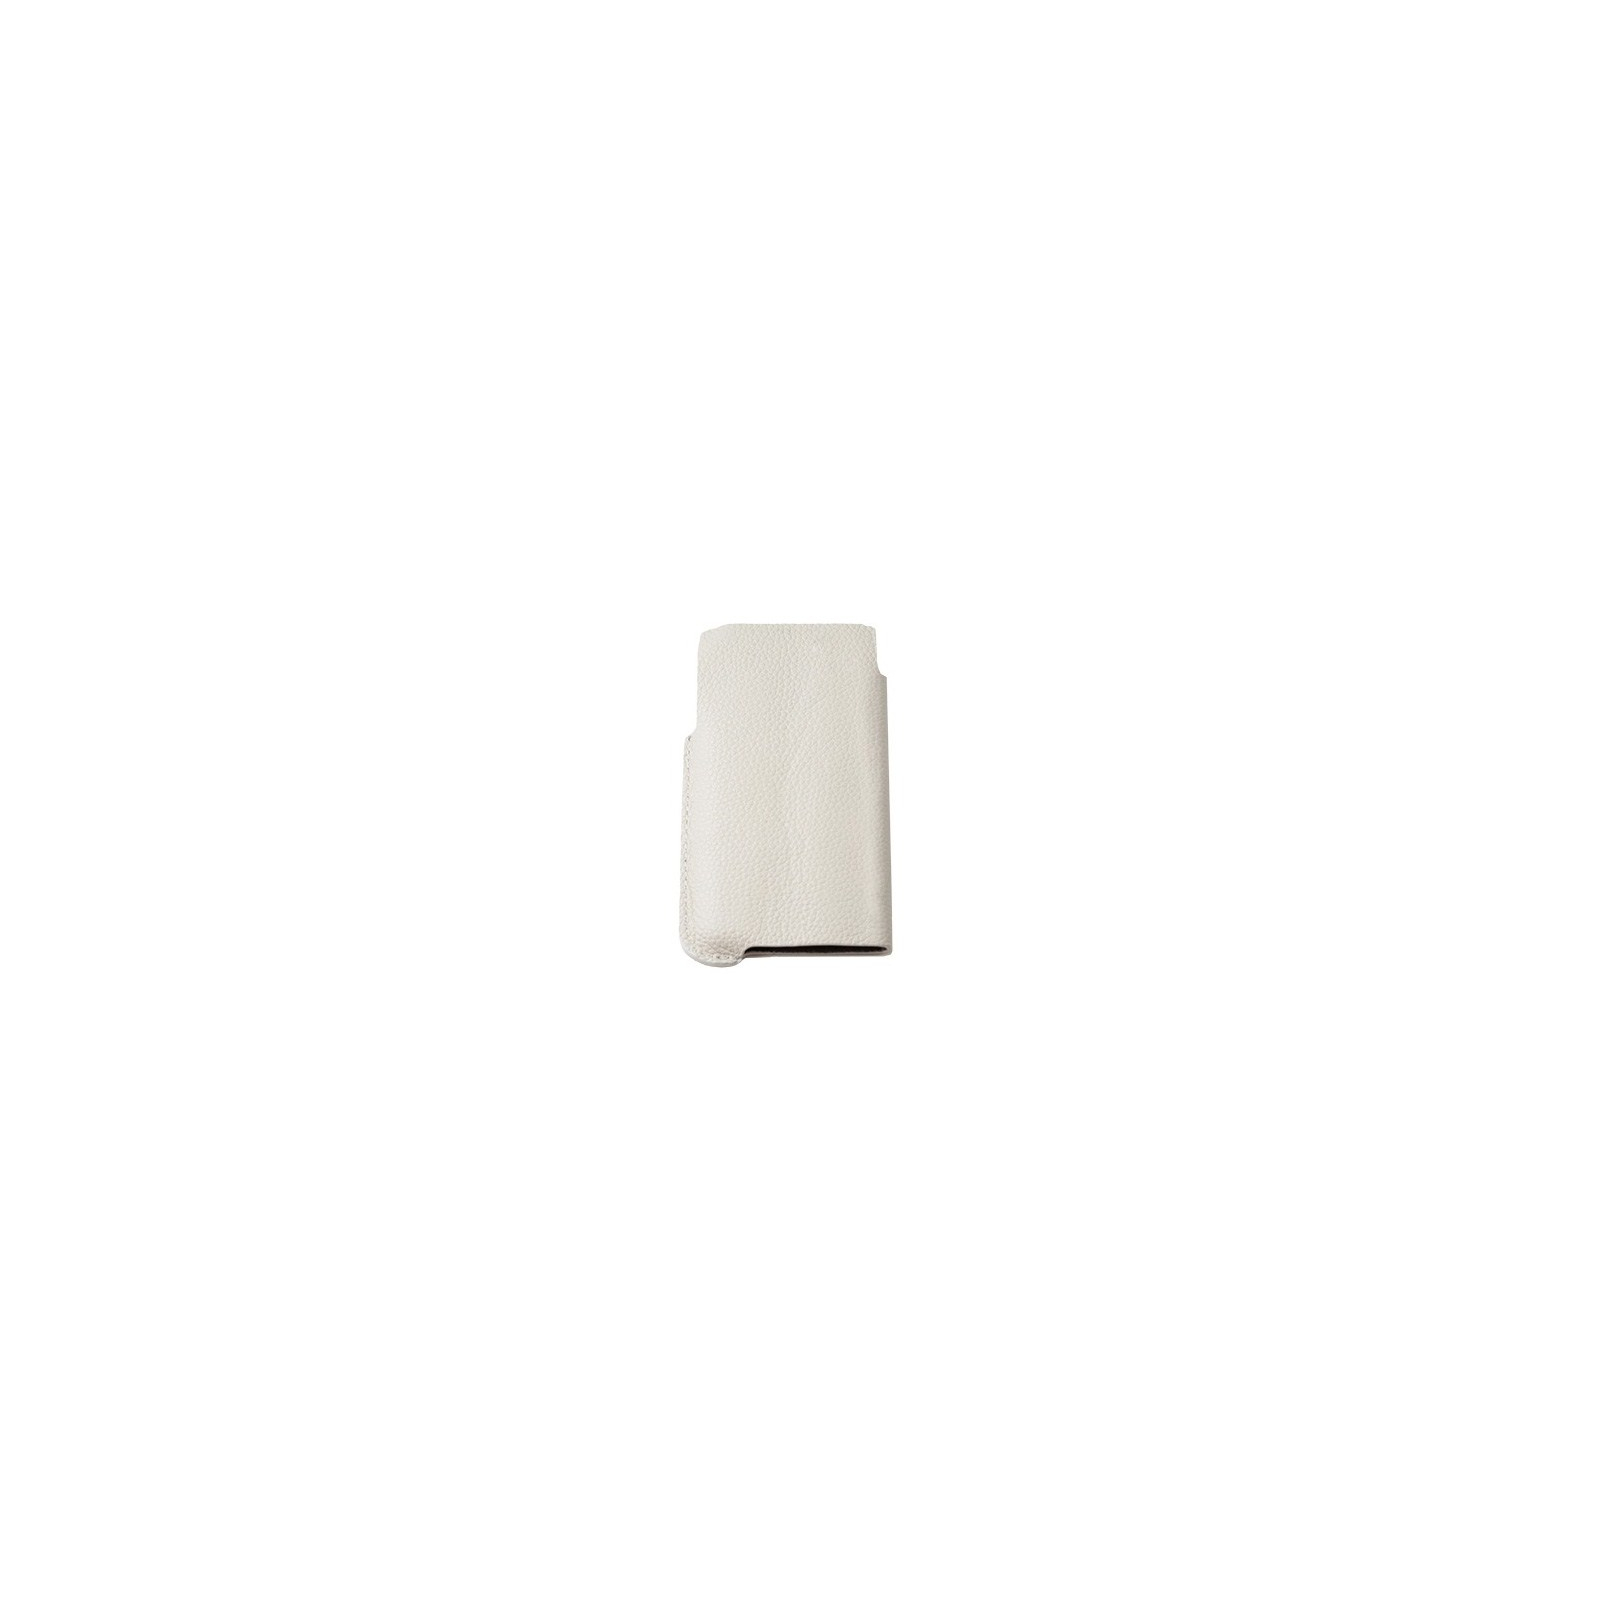 Чехол для мобильного телефона Drobak для Nokia 520 Lumia /Classic pocket White (215103)